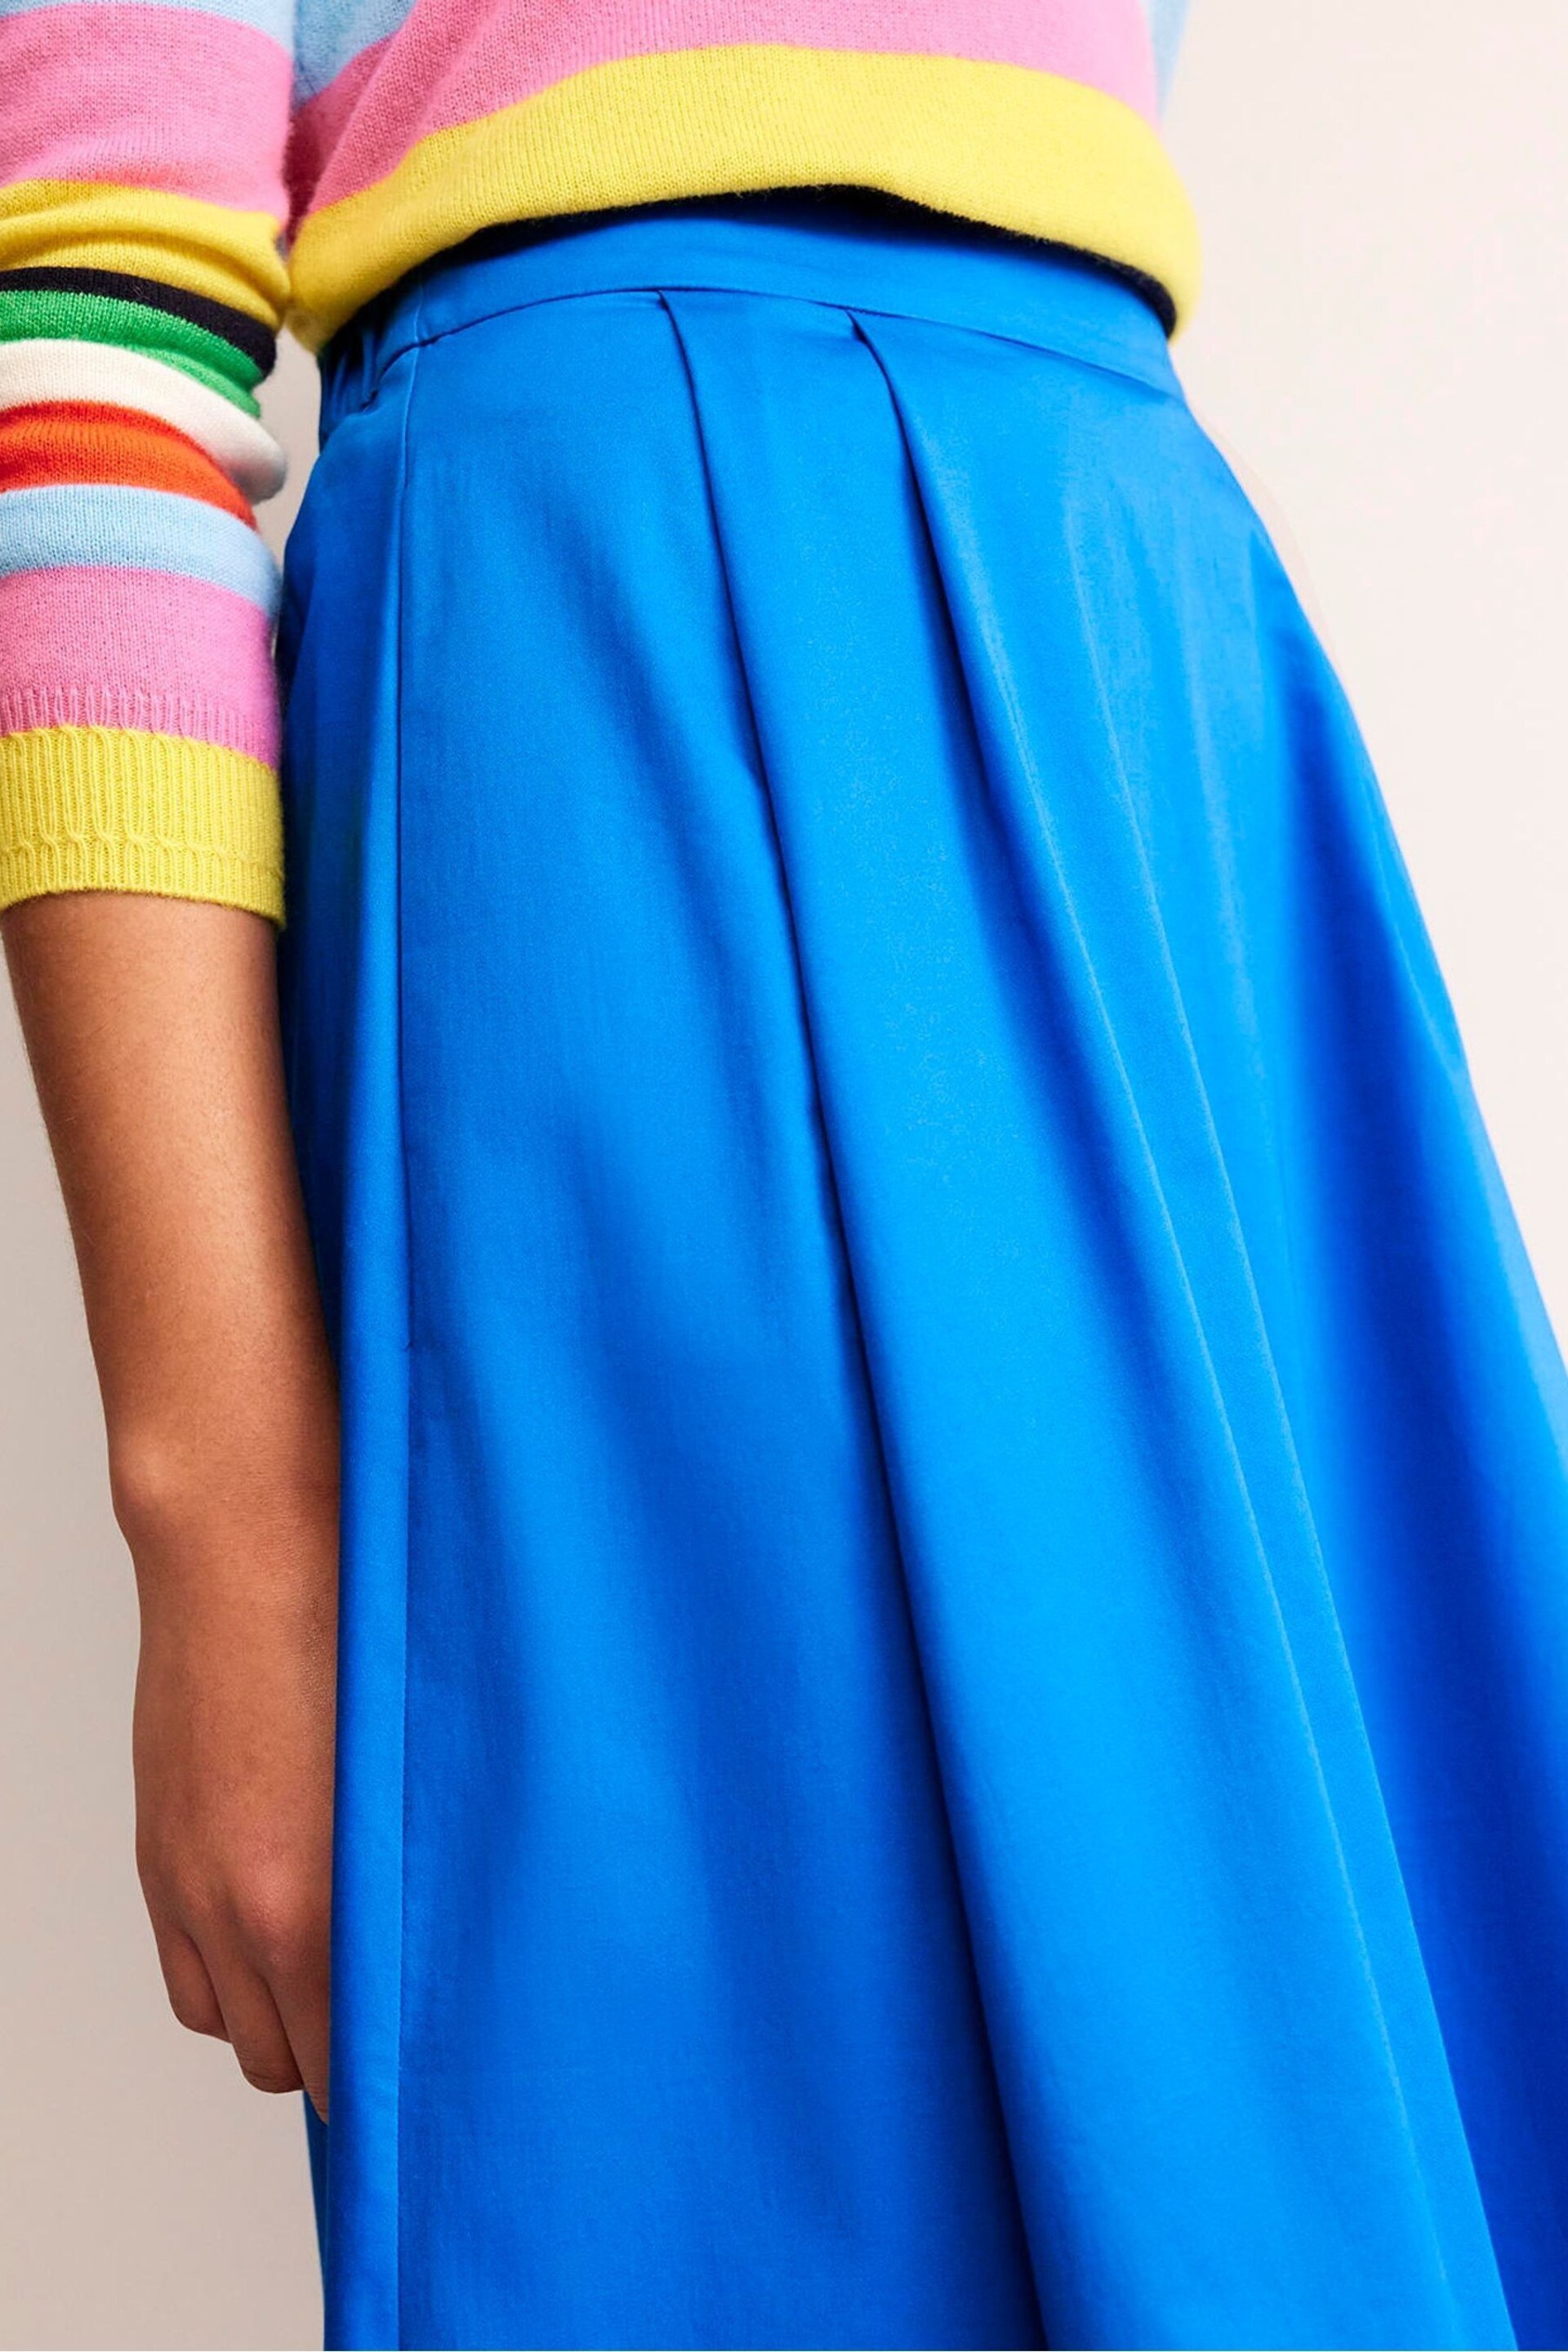 Boden Blue Petite Isabella Cotton Sateen Skirt - Image 4 of 5